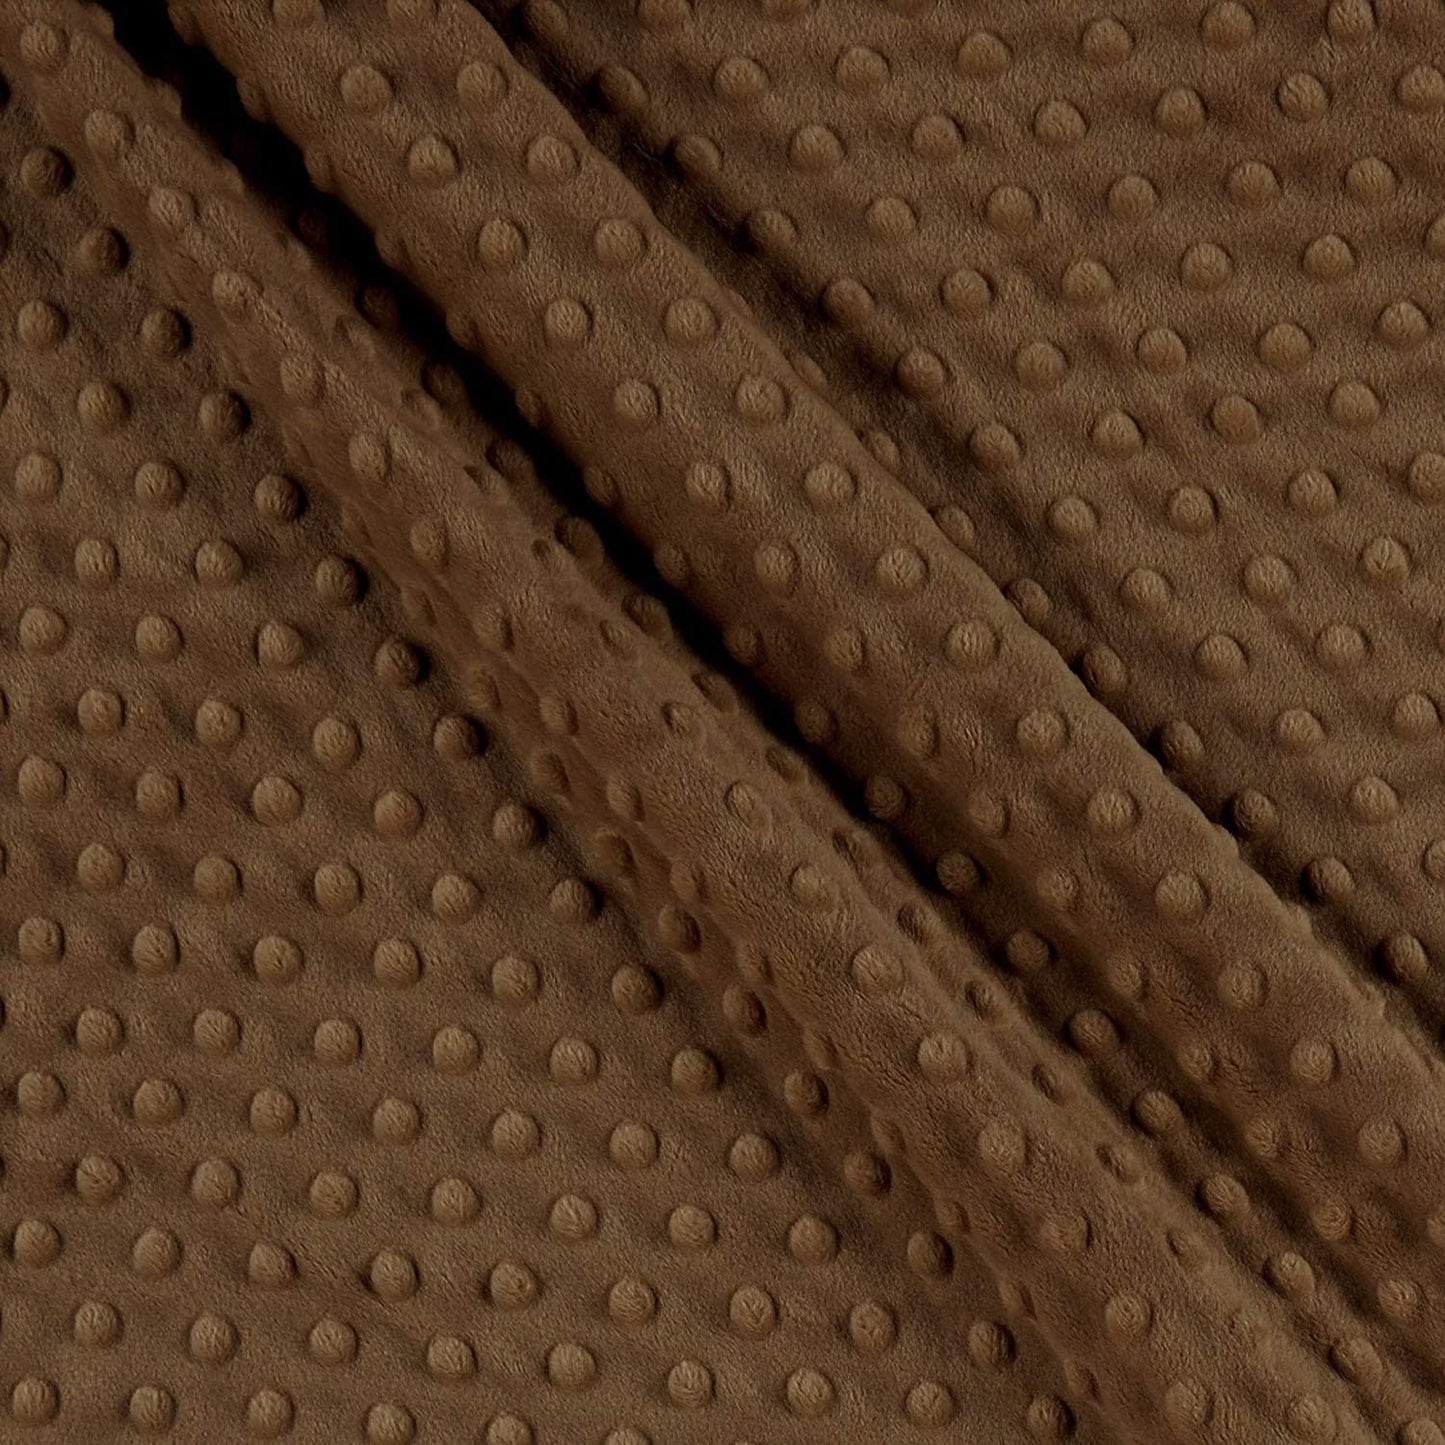 Minky Dimple Dot Soft Cuddle Fabric (Brown, 1 Yard)